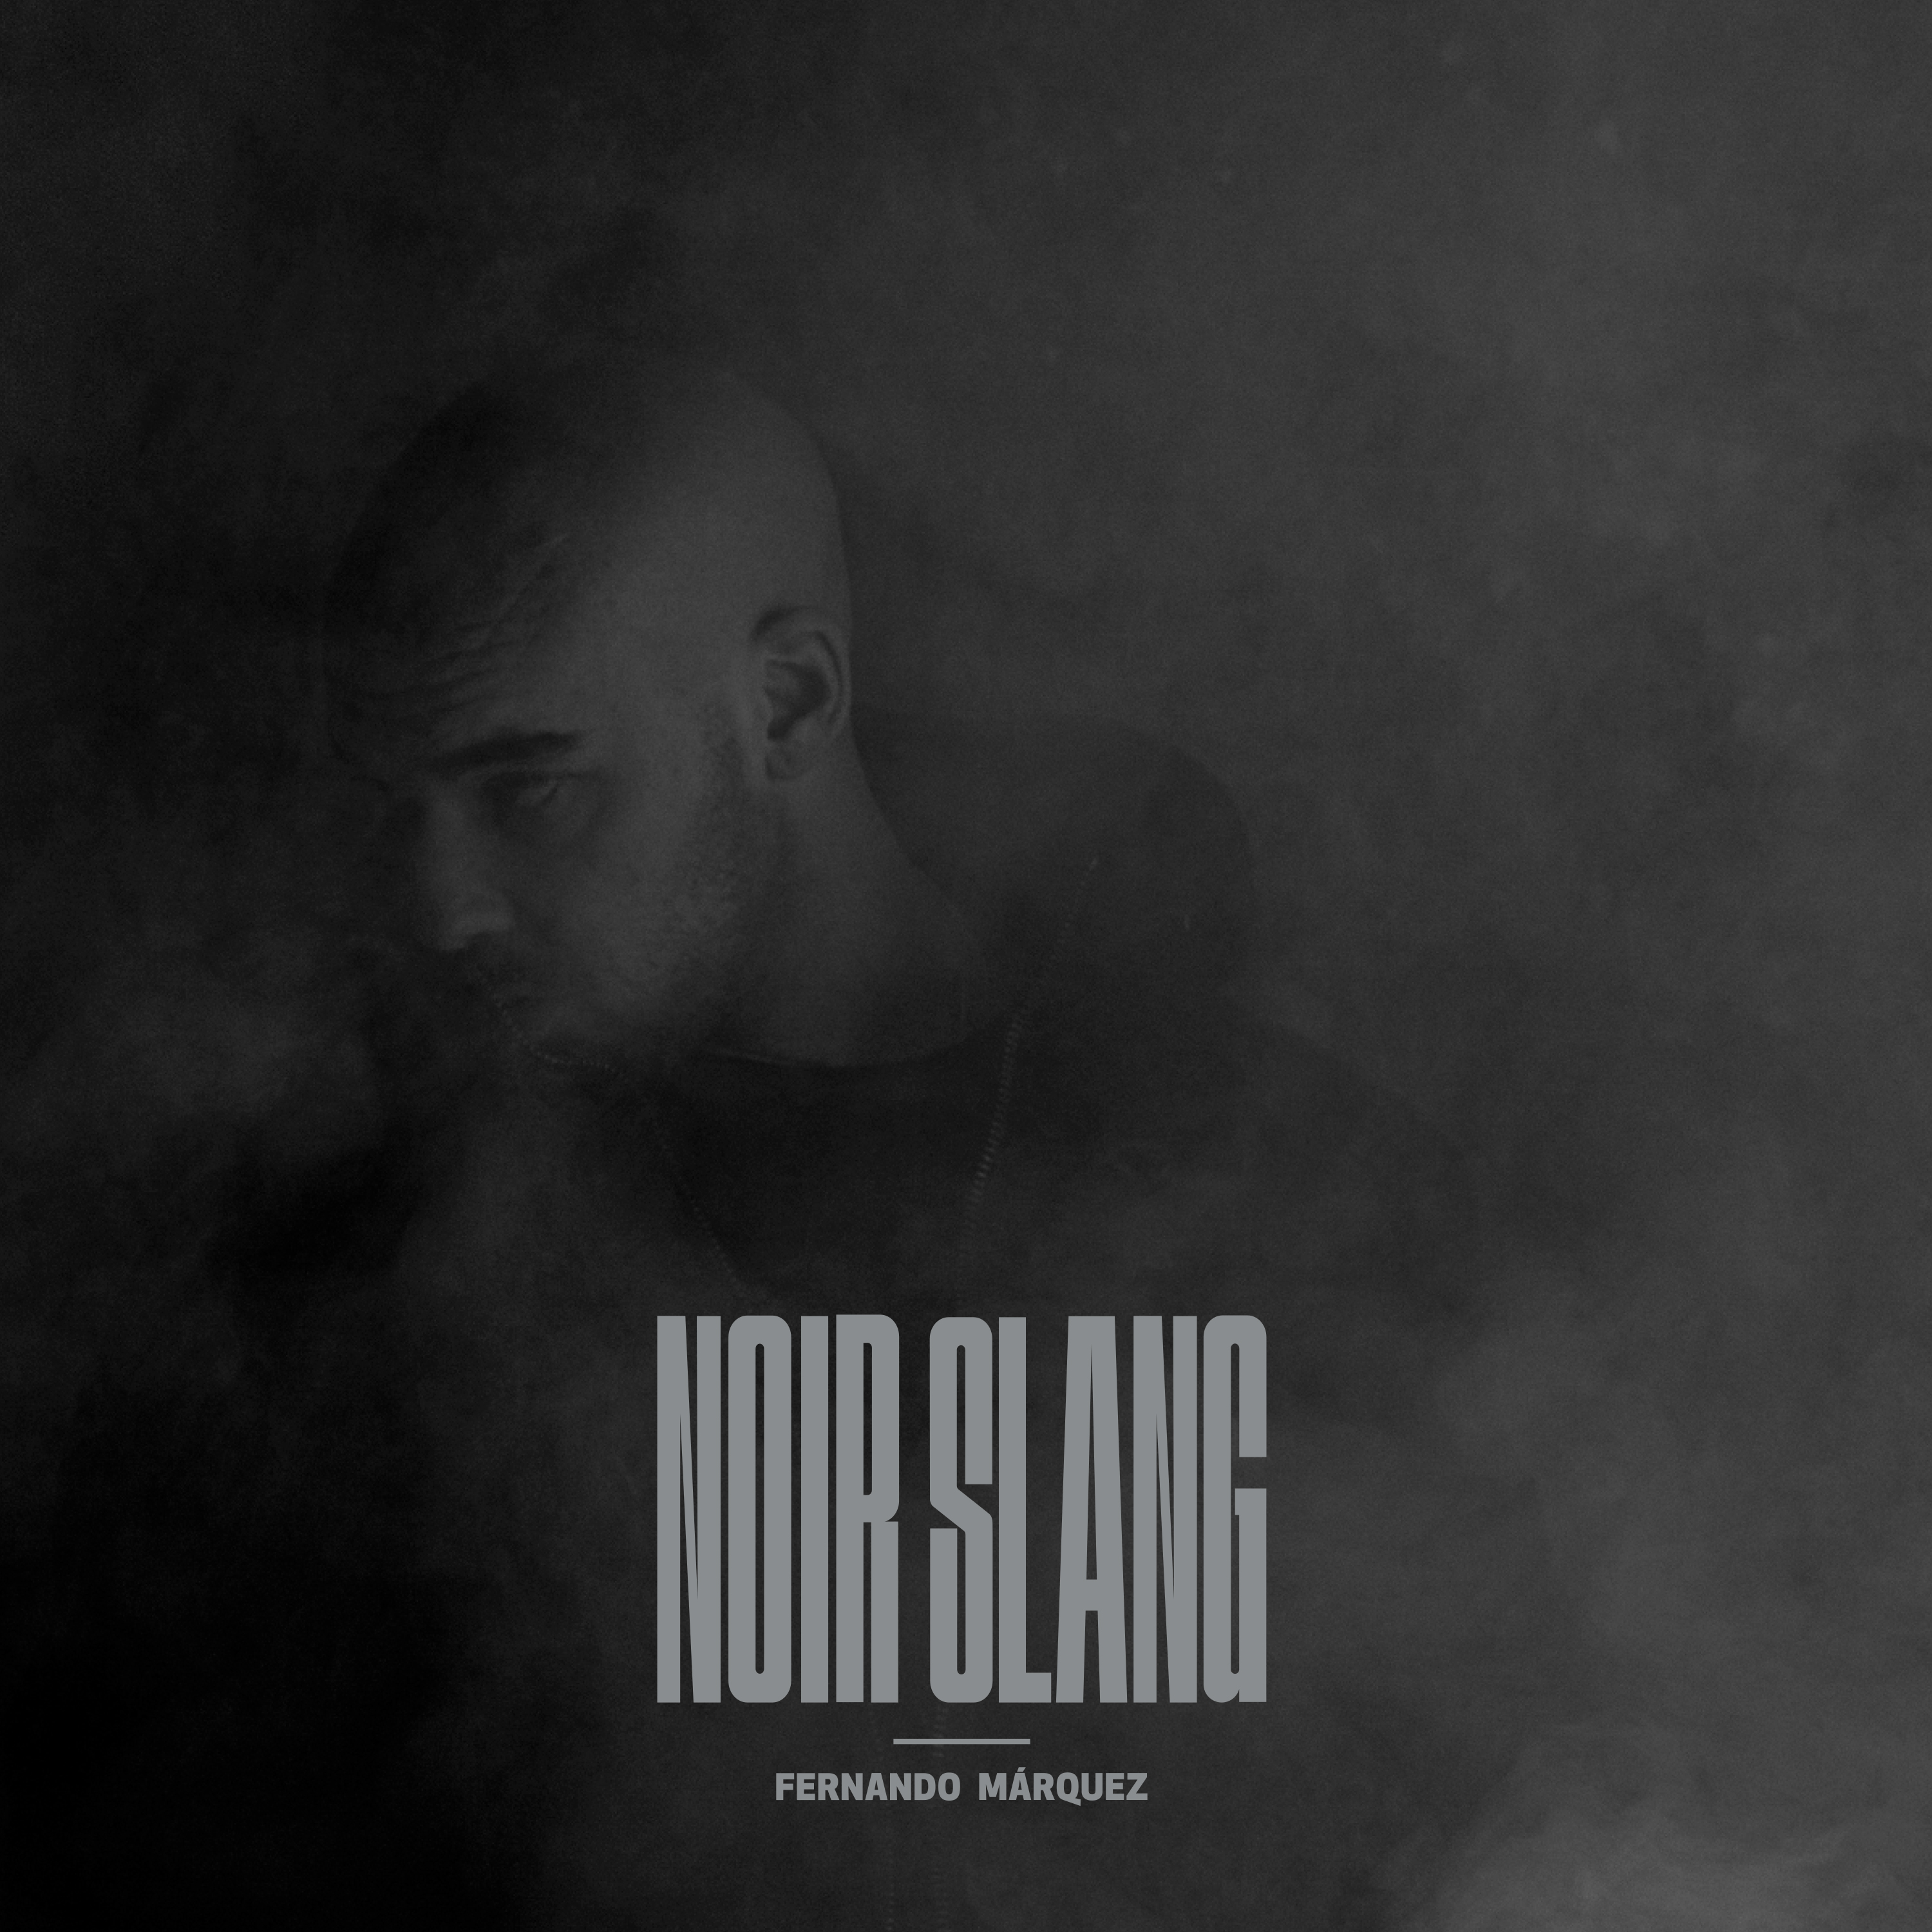 Noir_slang